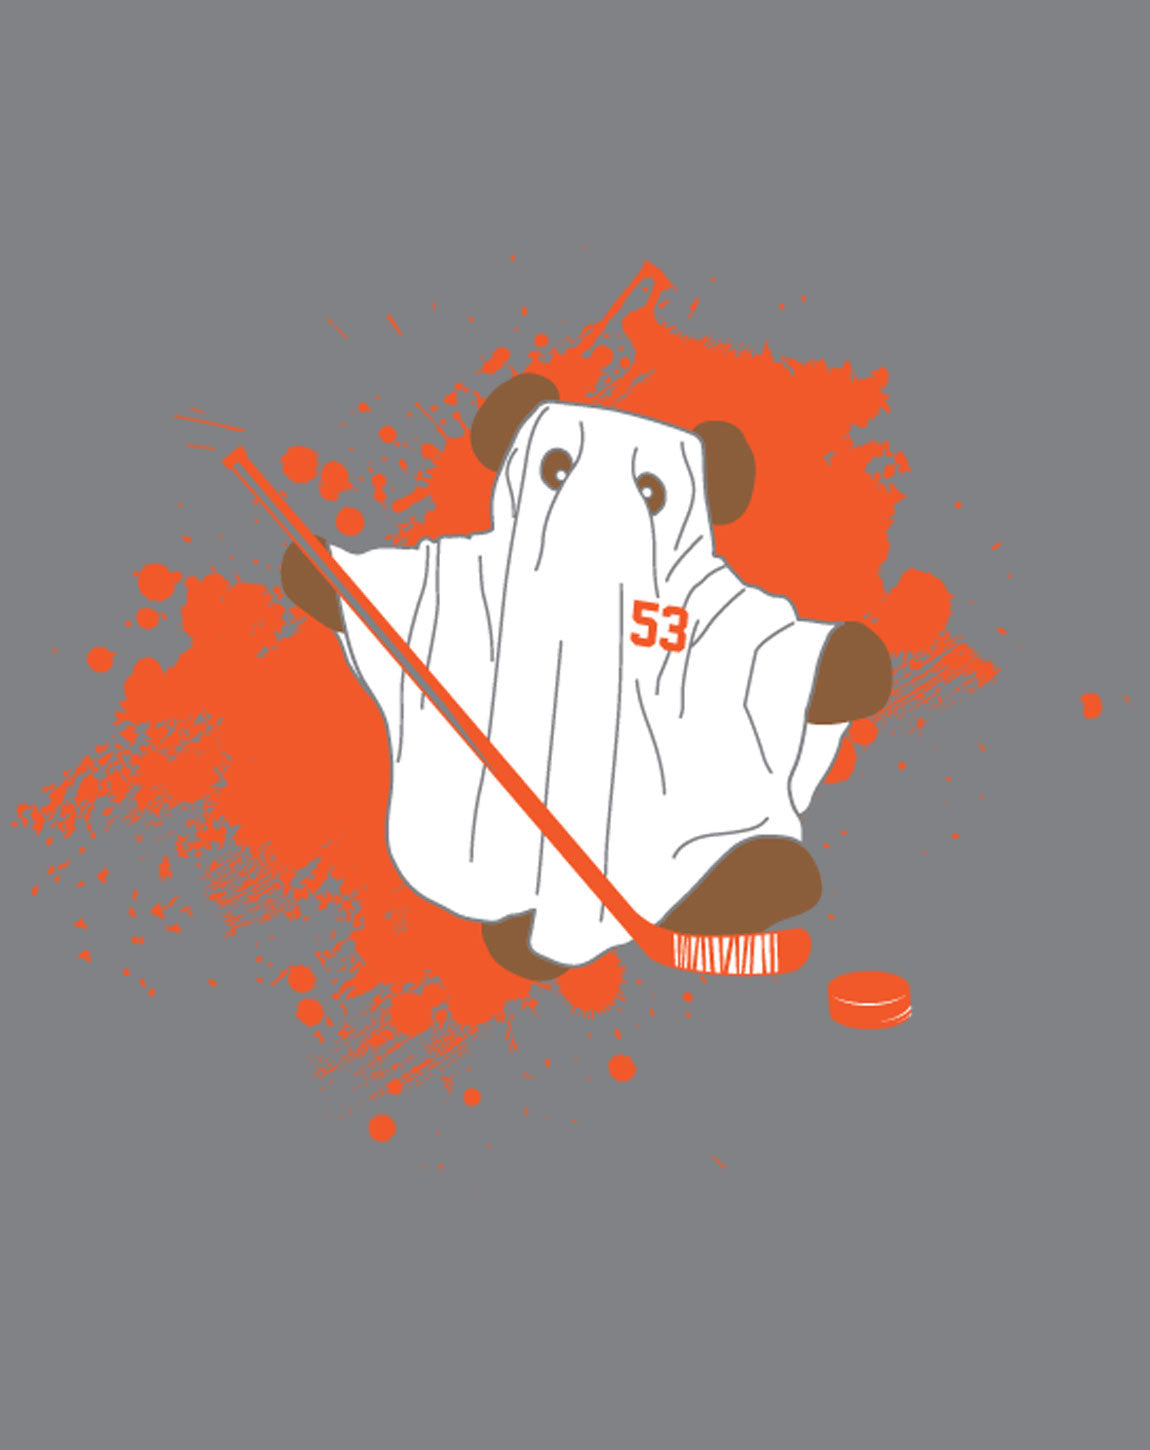 ghost bear flyers shirt